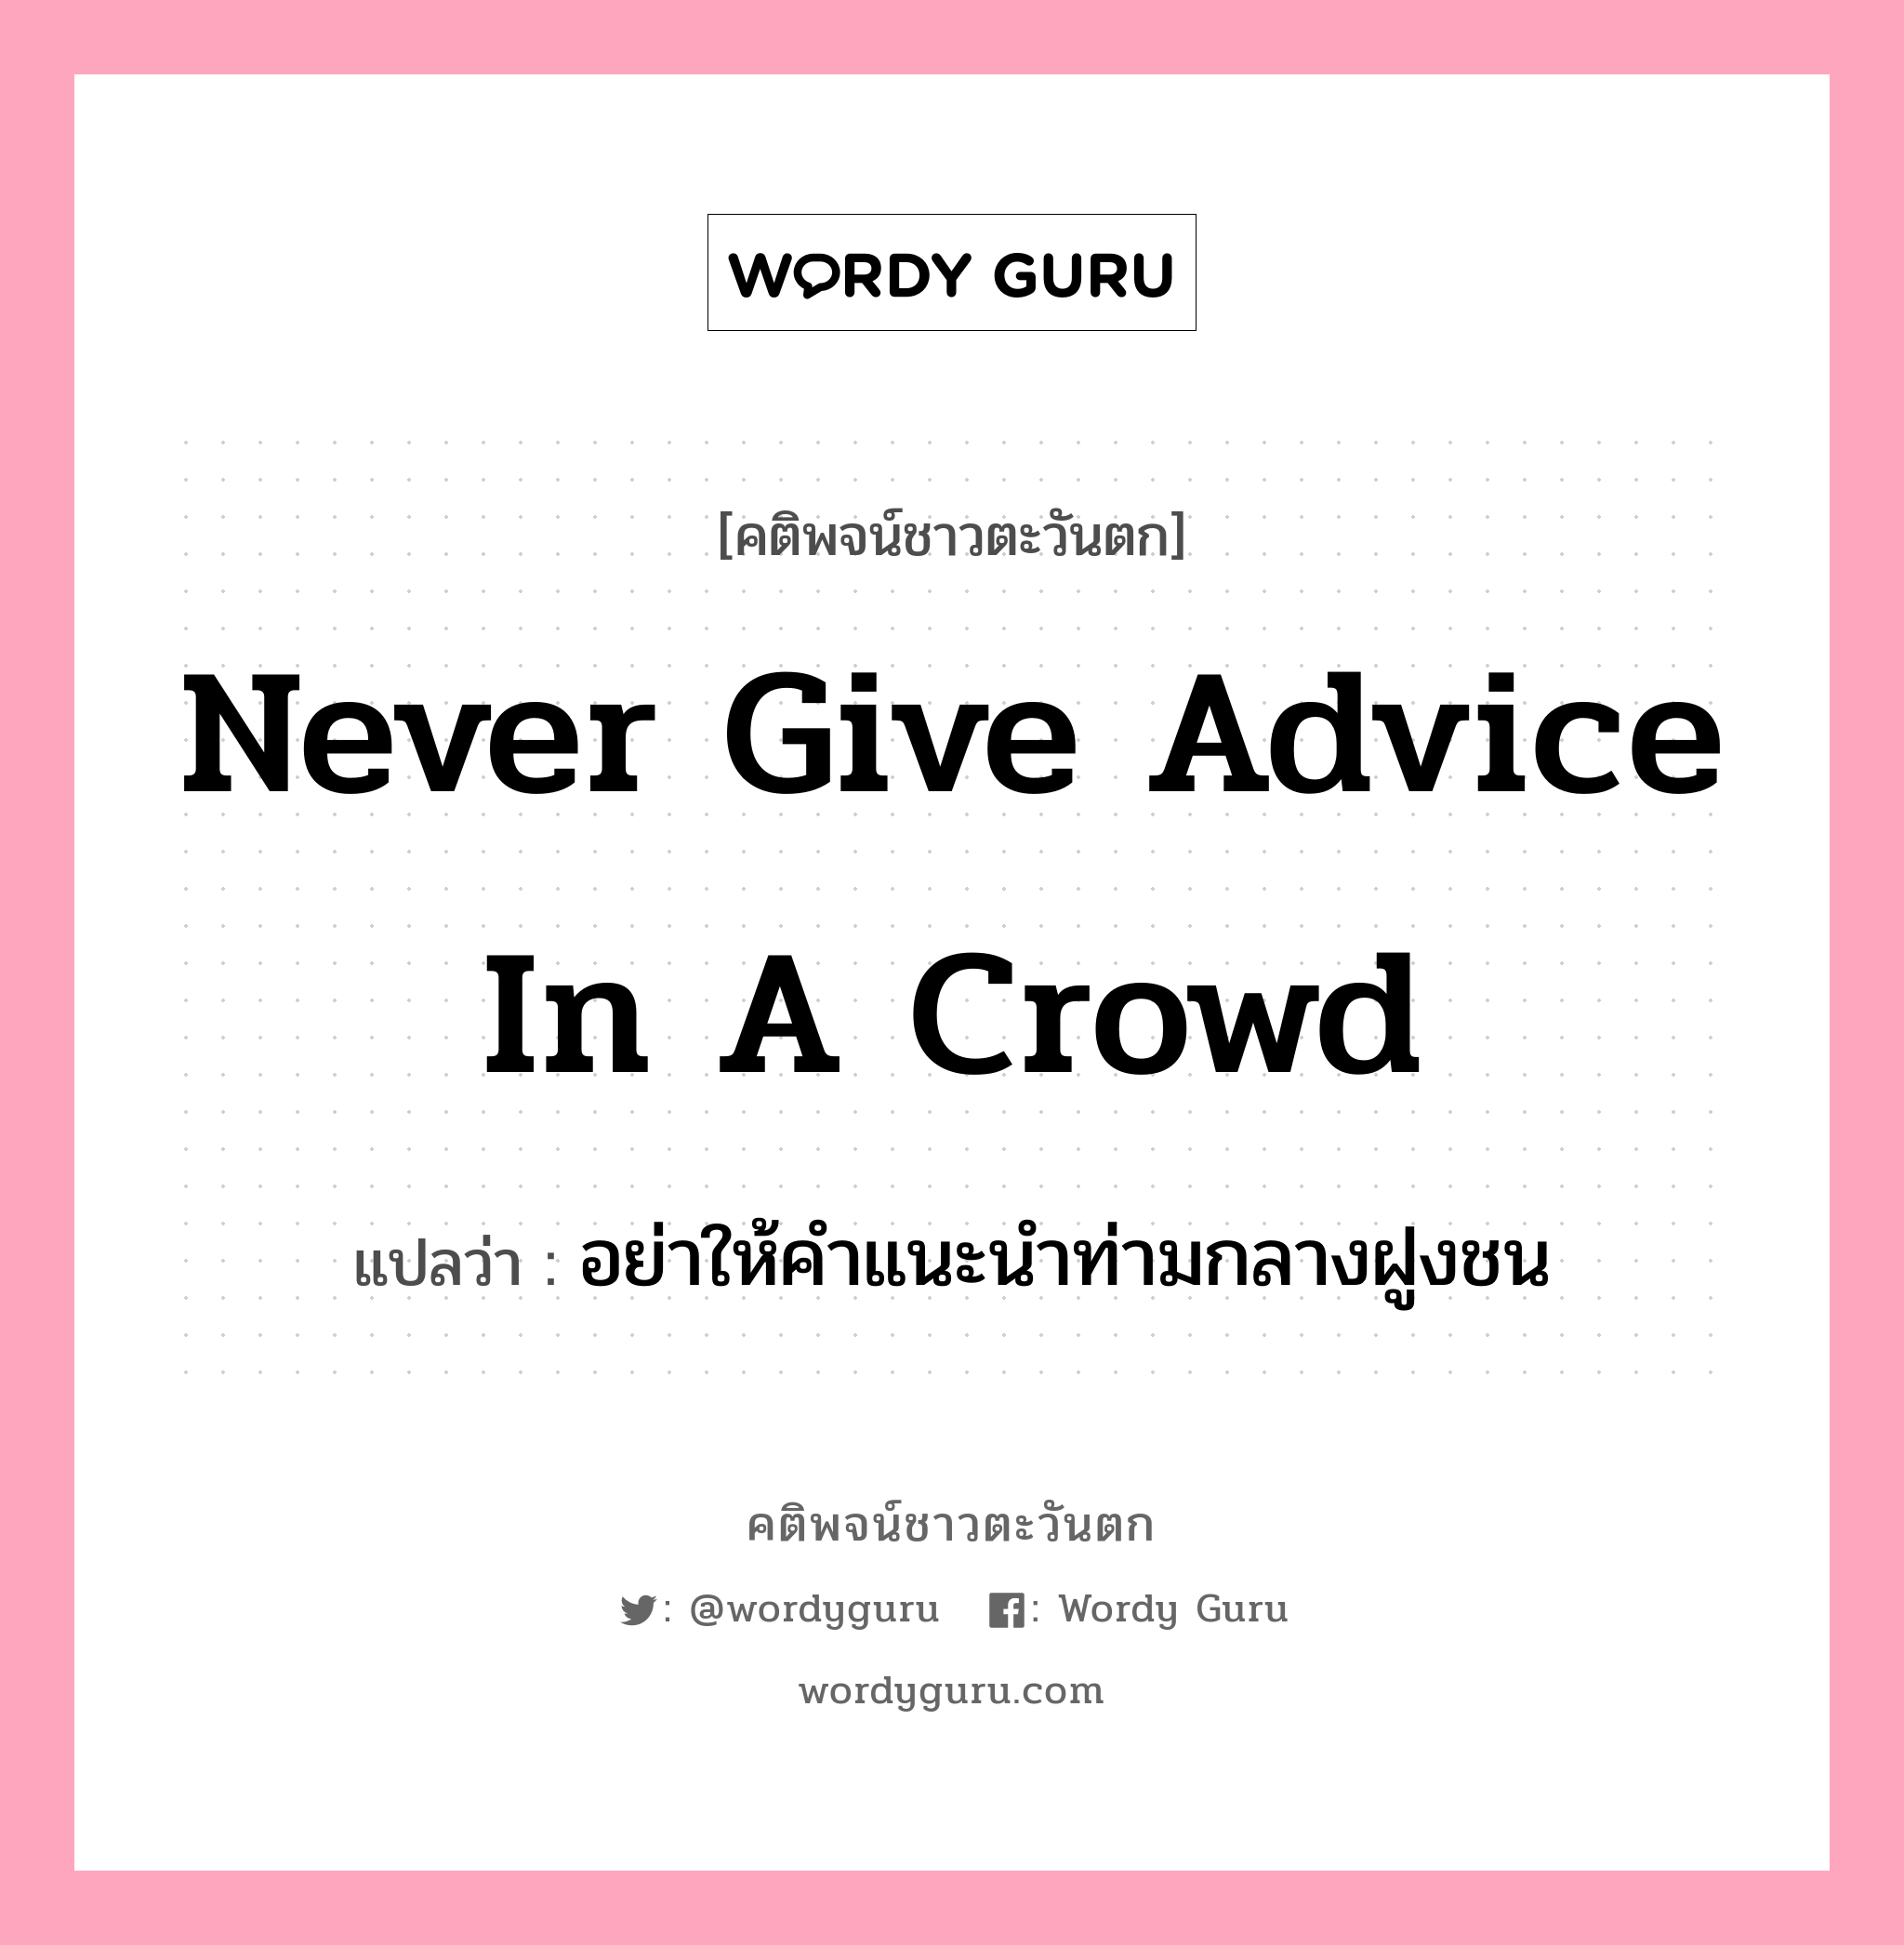 Never give advice in a crowd, คติพจน์ชาวตะวันตก Never give advice in a crowd แปลว่า อย่าให้คำแนะนำท่ามกลางฝูงชน